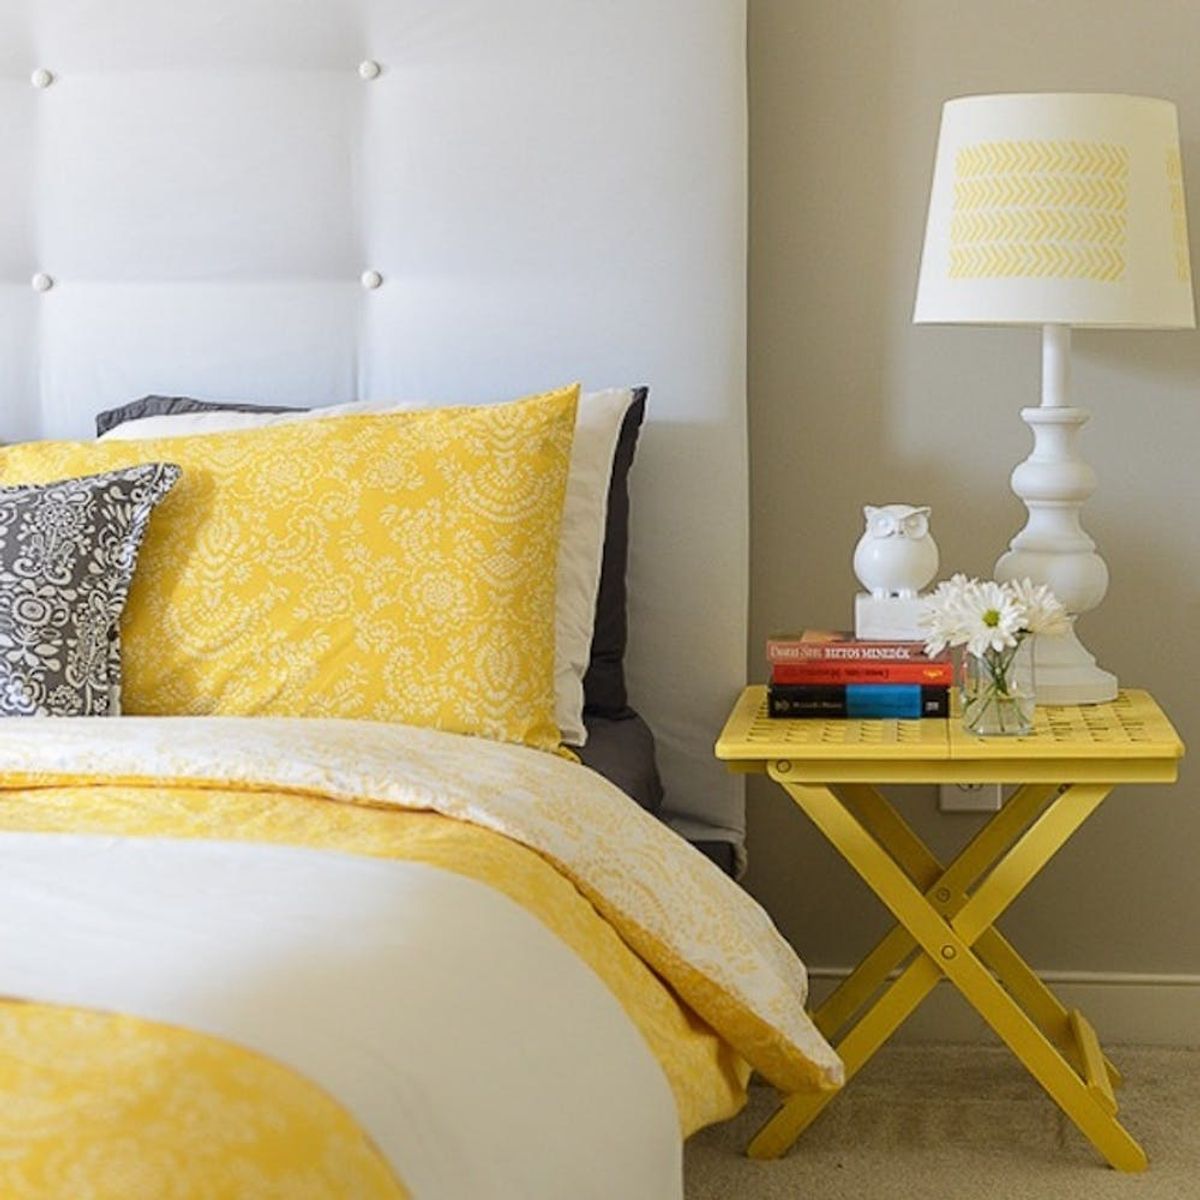 26 IKEA Hacks to Freshen Up Your Bedroom